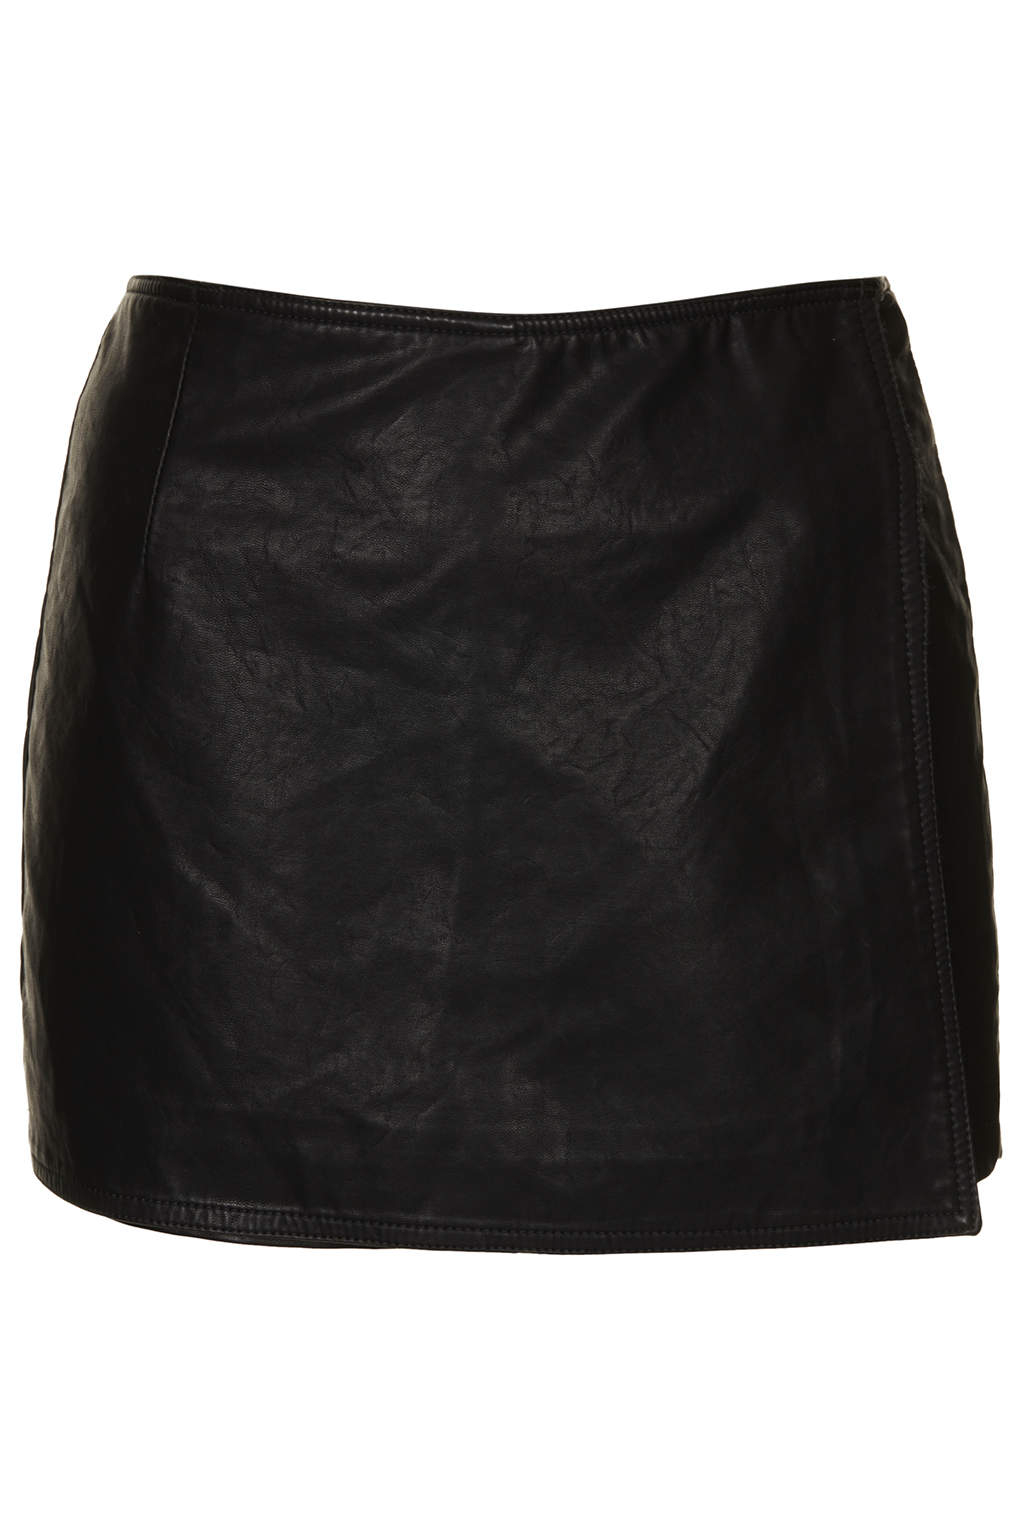 Lyst - Topshop Black Faux Leather Skort in Black